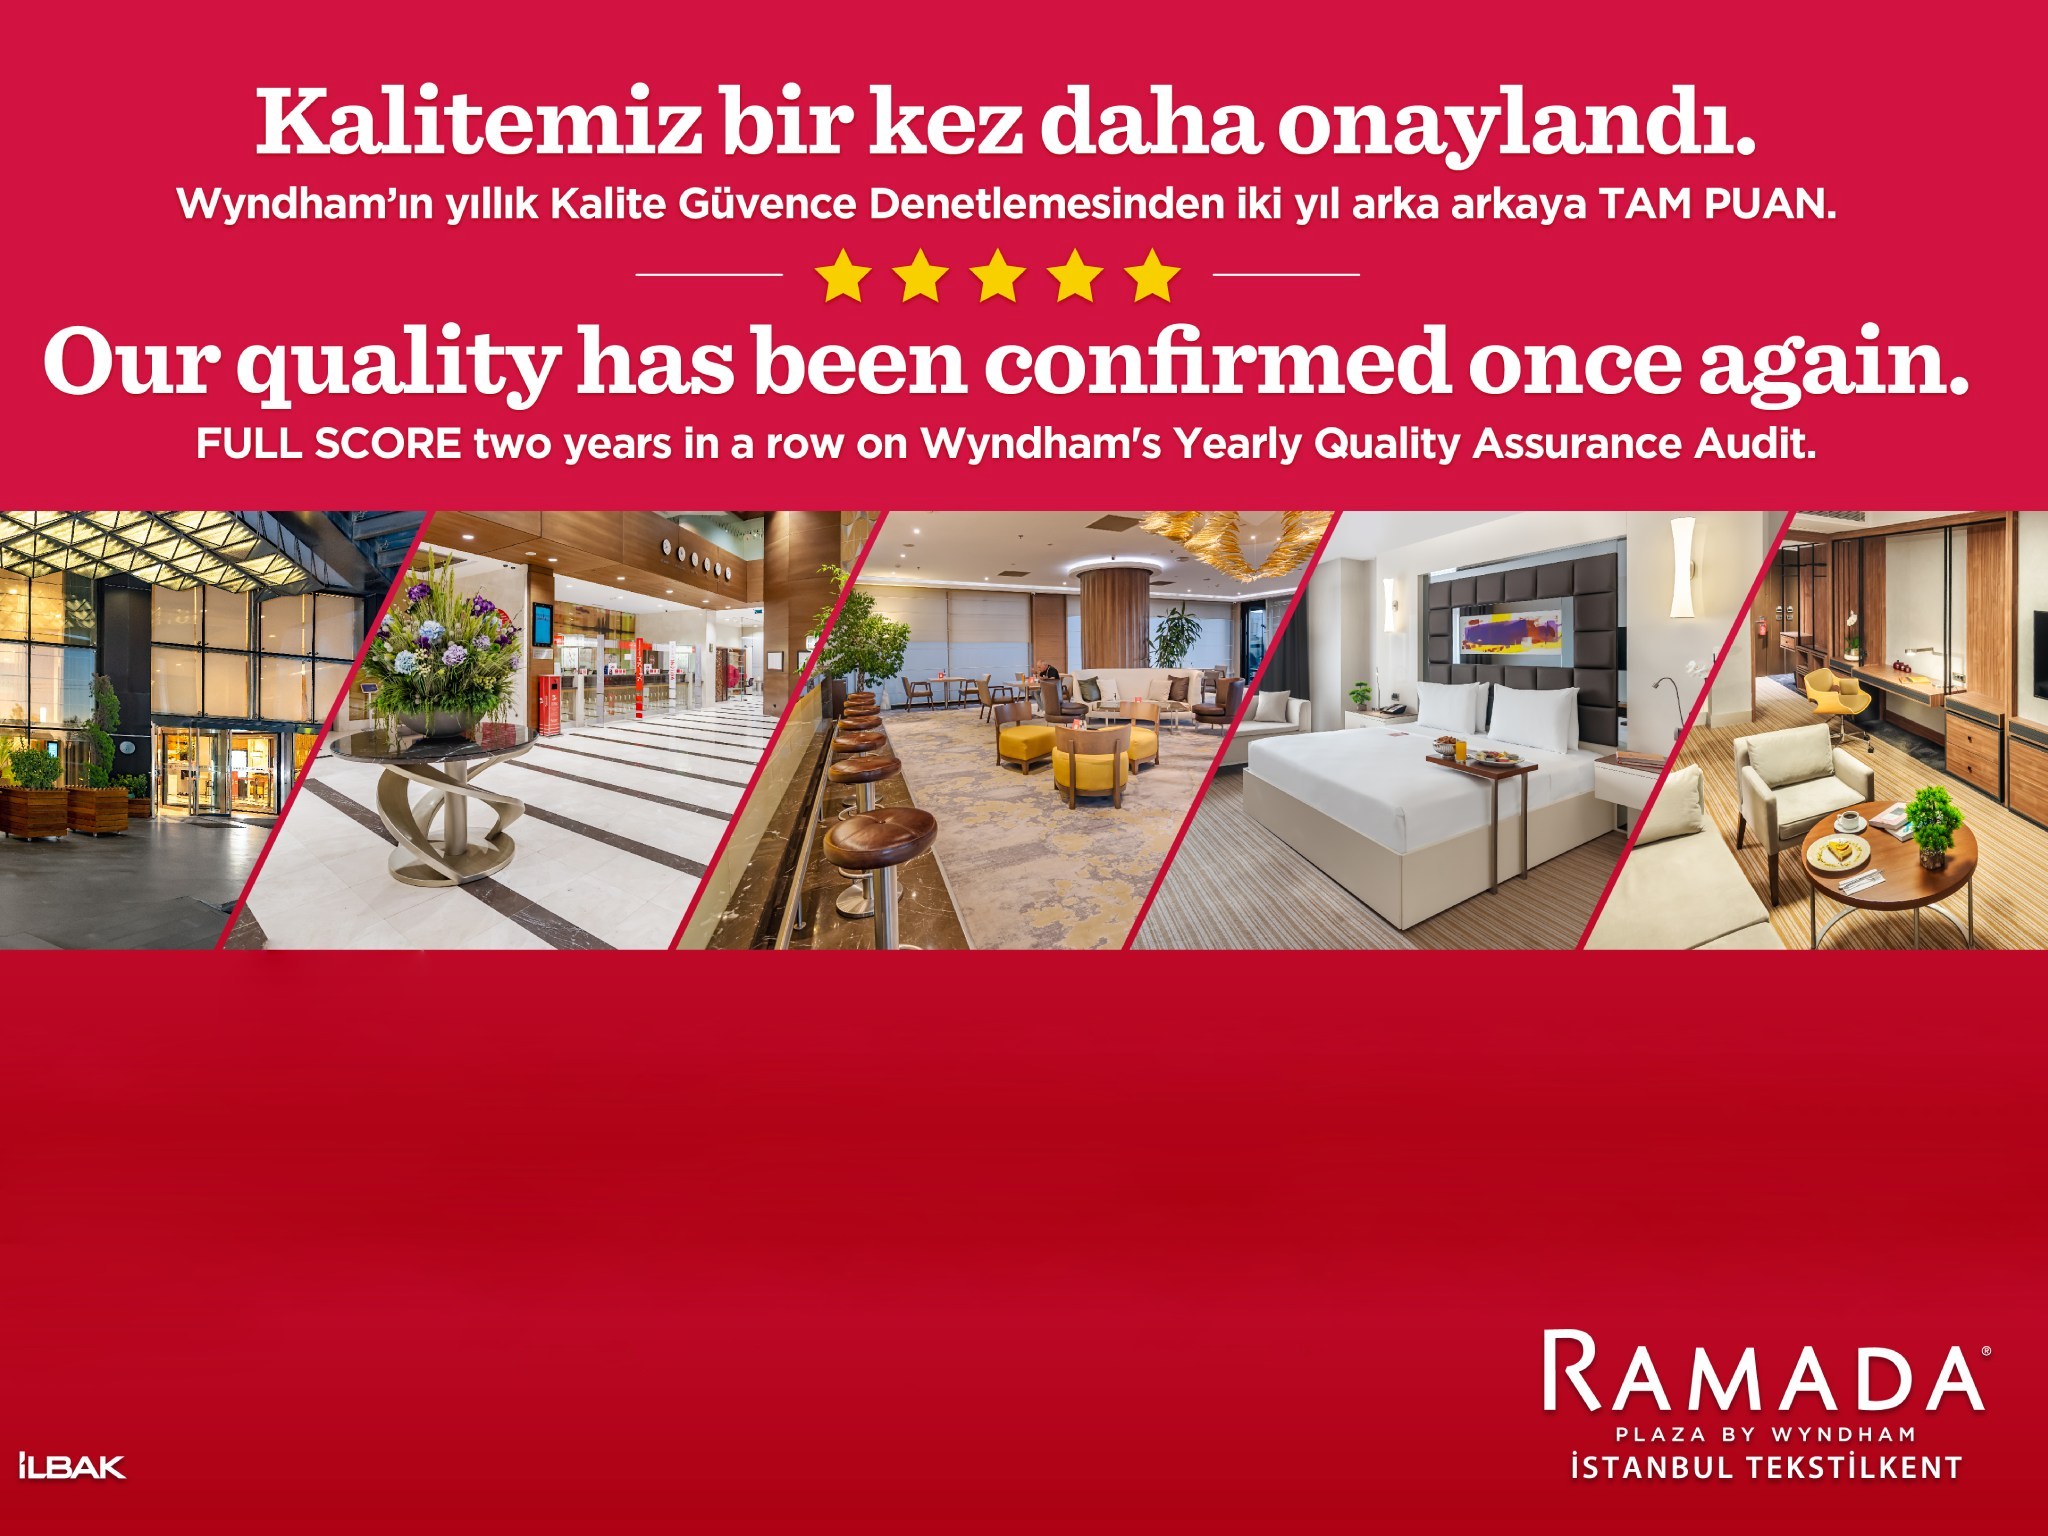 Ramada Plaza By Wyndham İstanbul Tekstilkent’e Wyndham’dan tam puan!